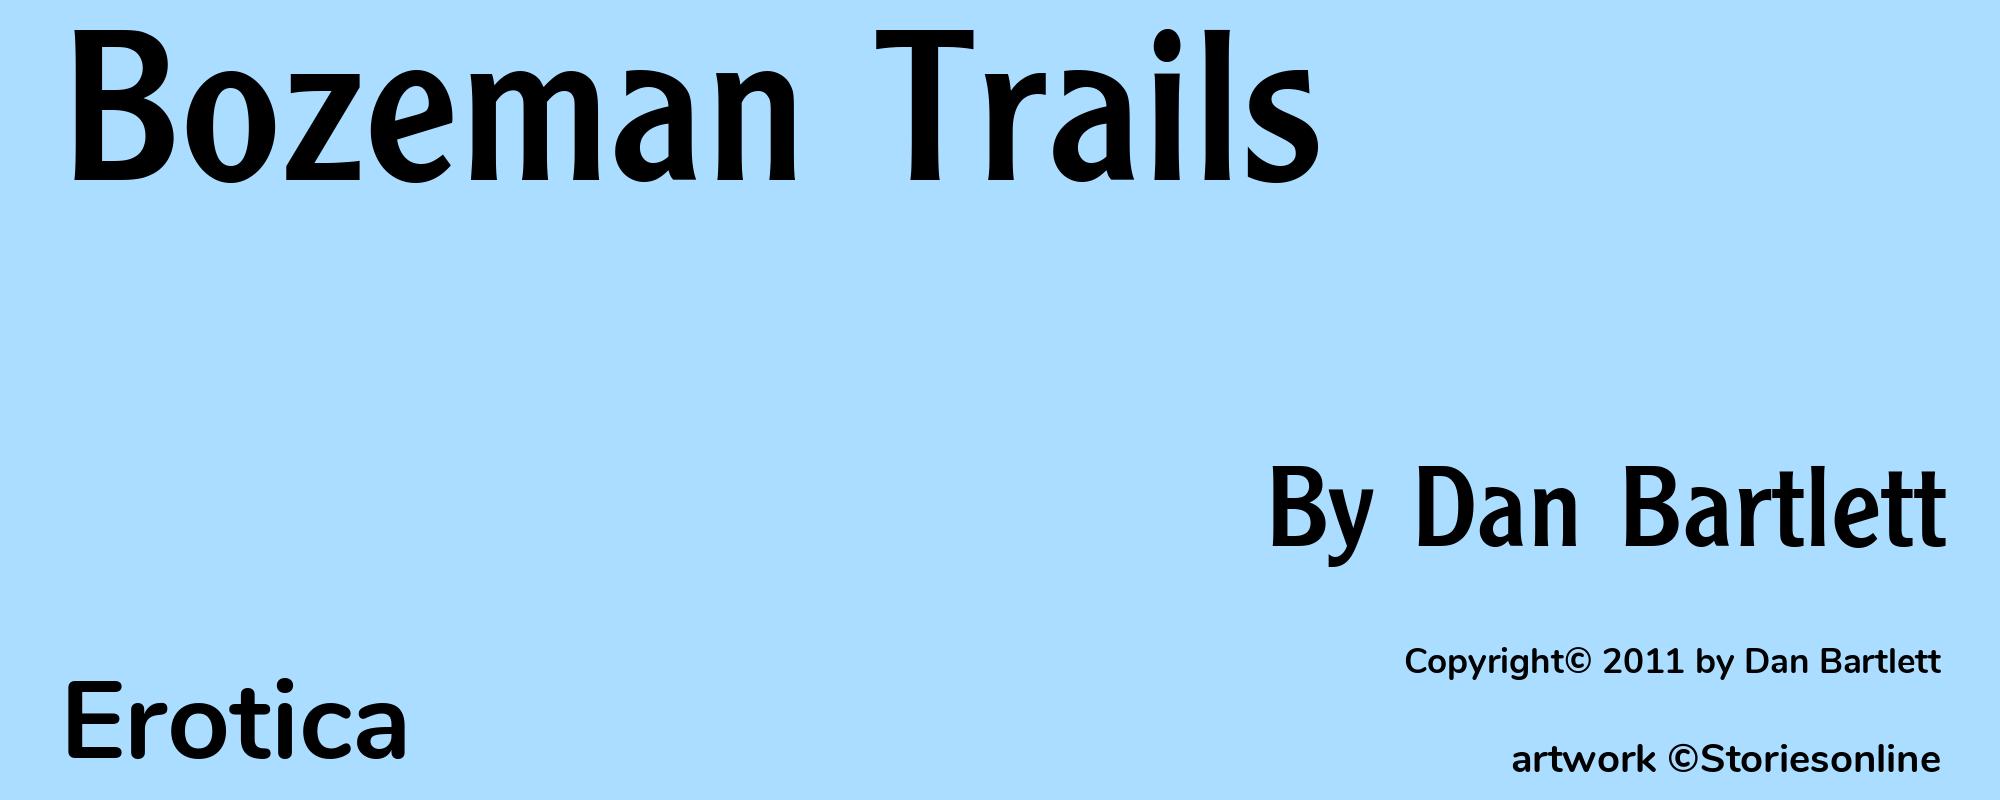 Bozeman Trails - Cover